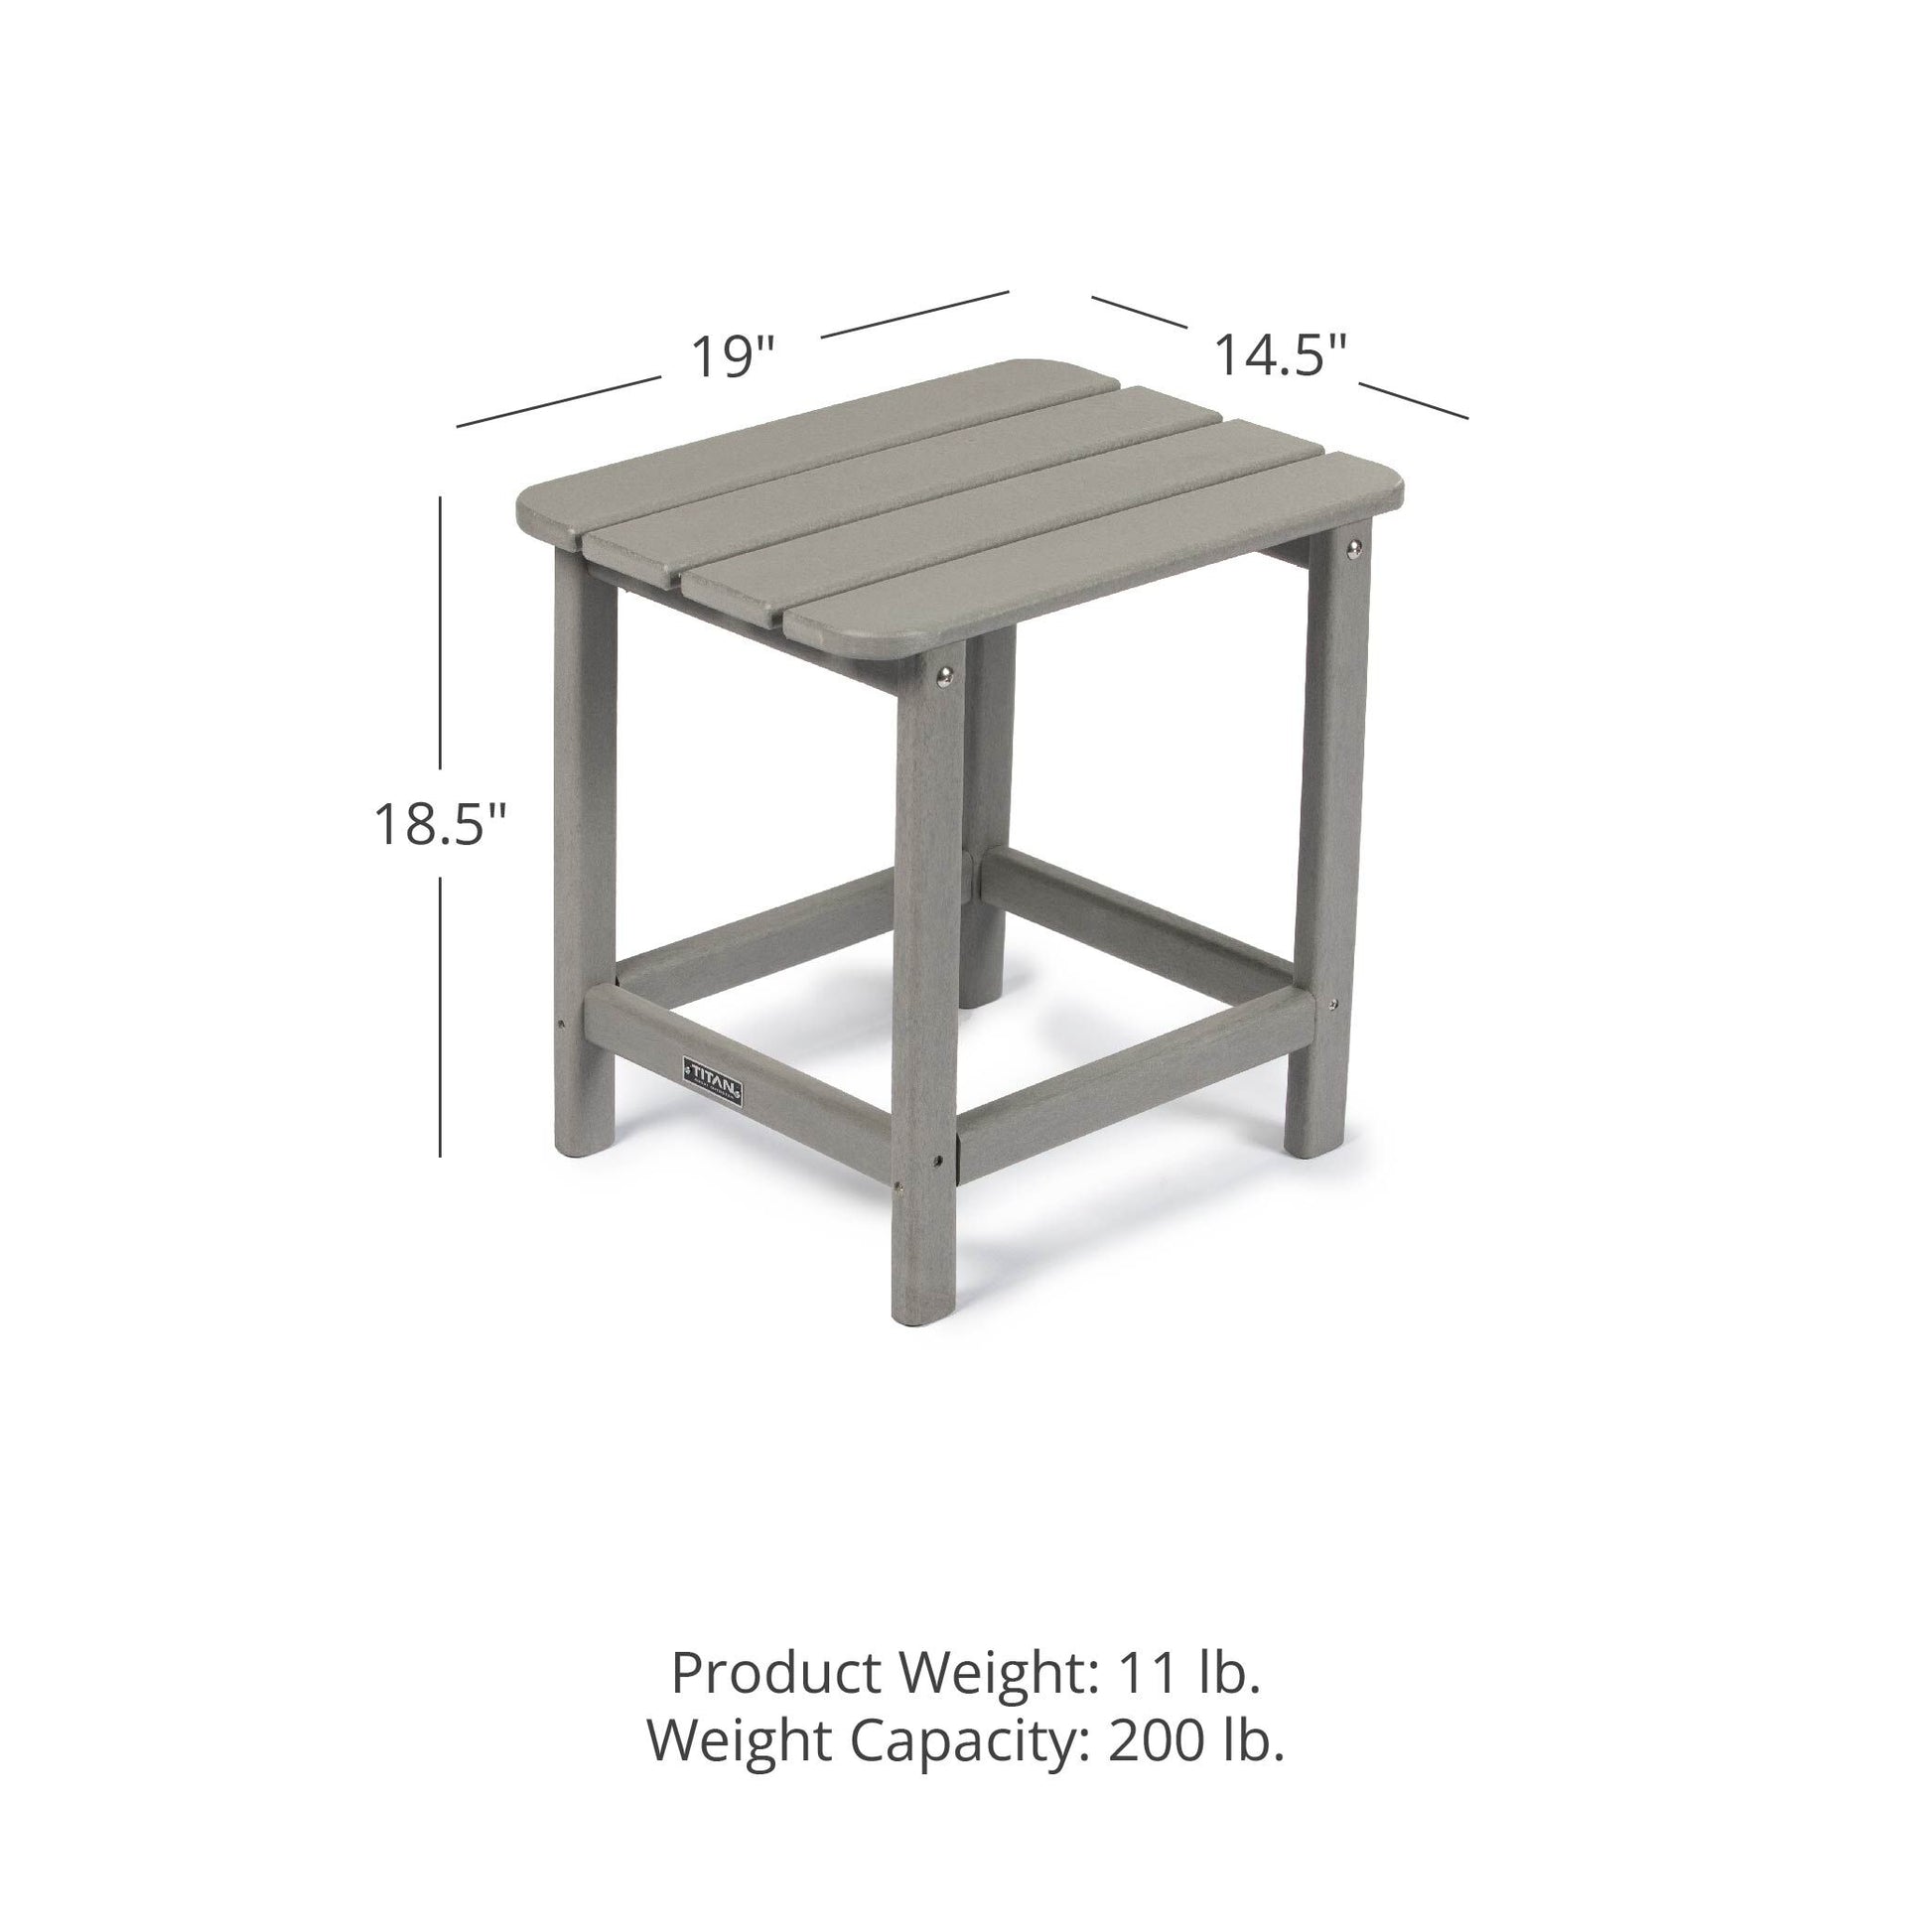 Everwood Hilltop Side Table - Table Color: Platinum Grey | Platinum Grey